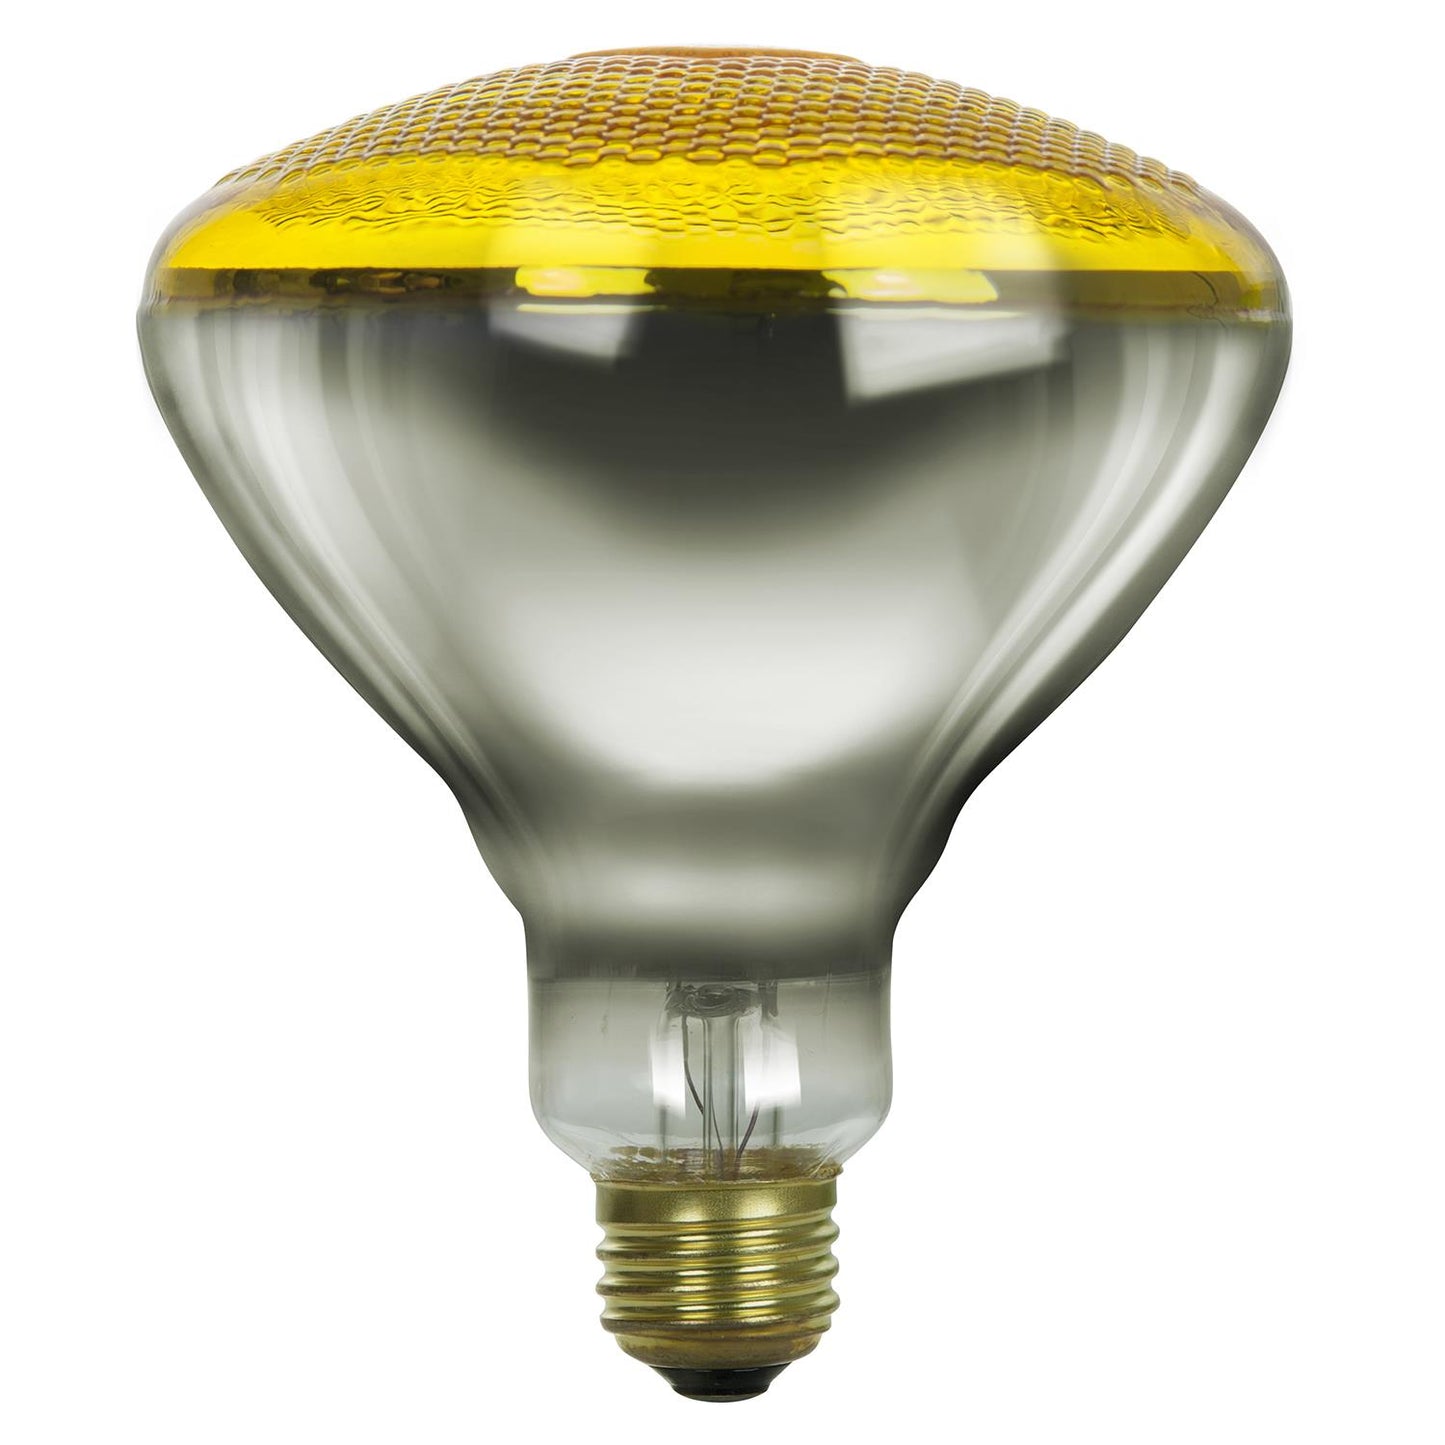 Sunlite 100 Watt BR38 Reflector, Medium Base, Prismatic Yellow